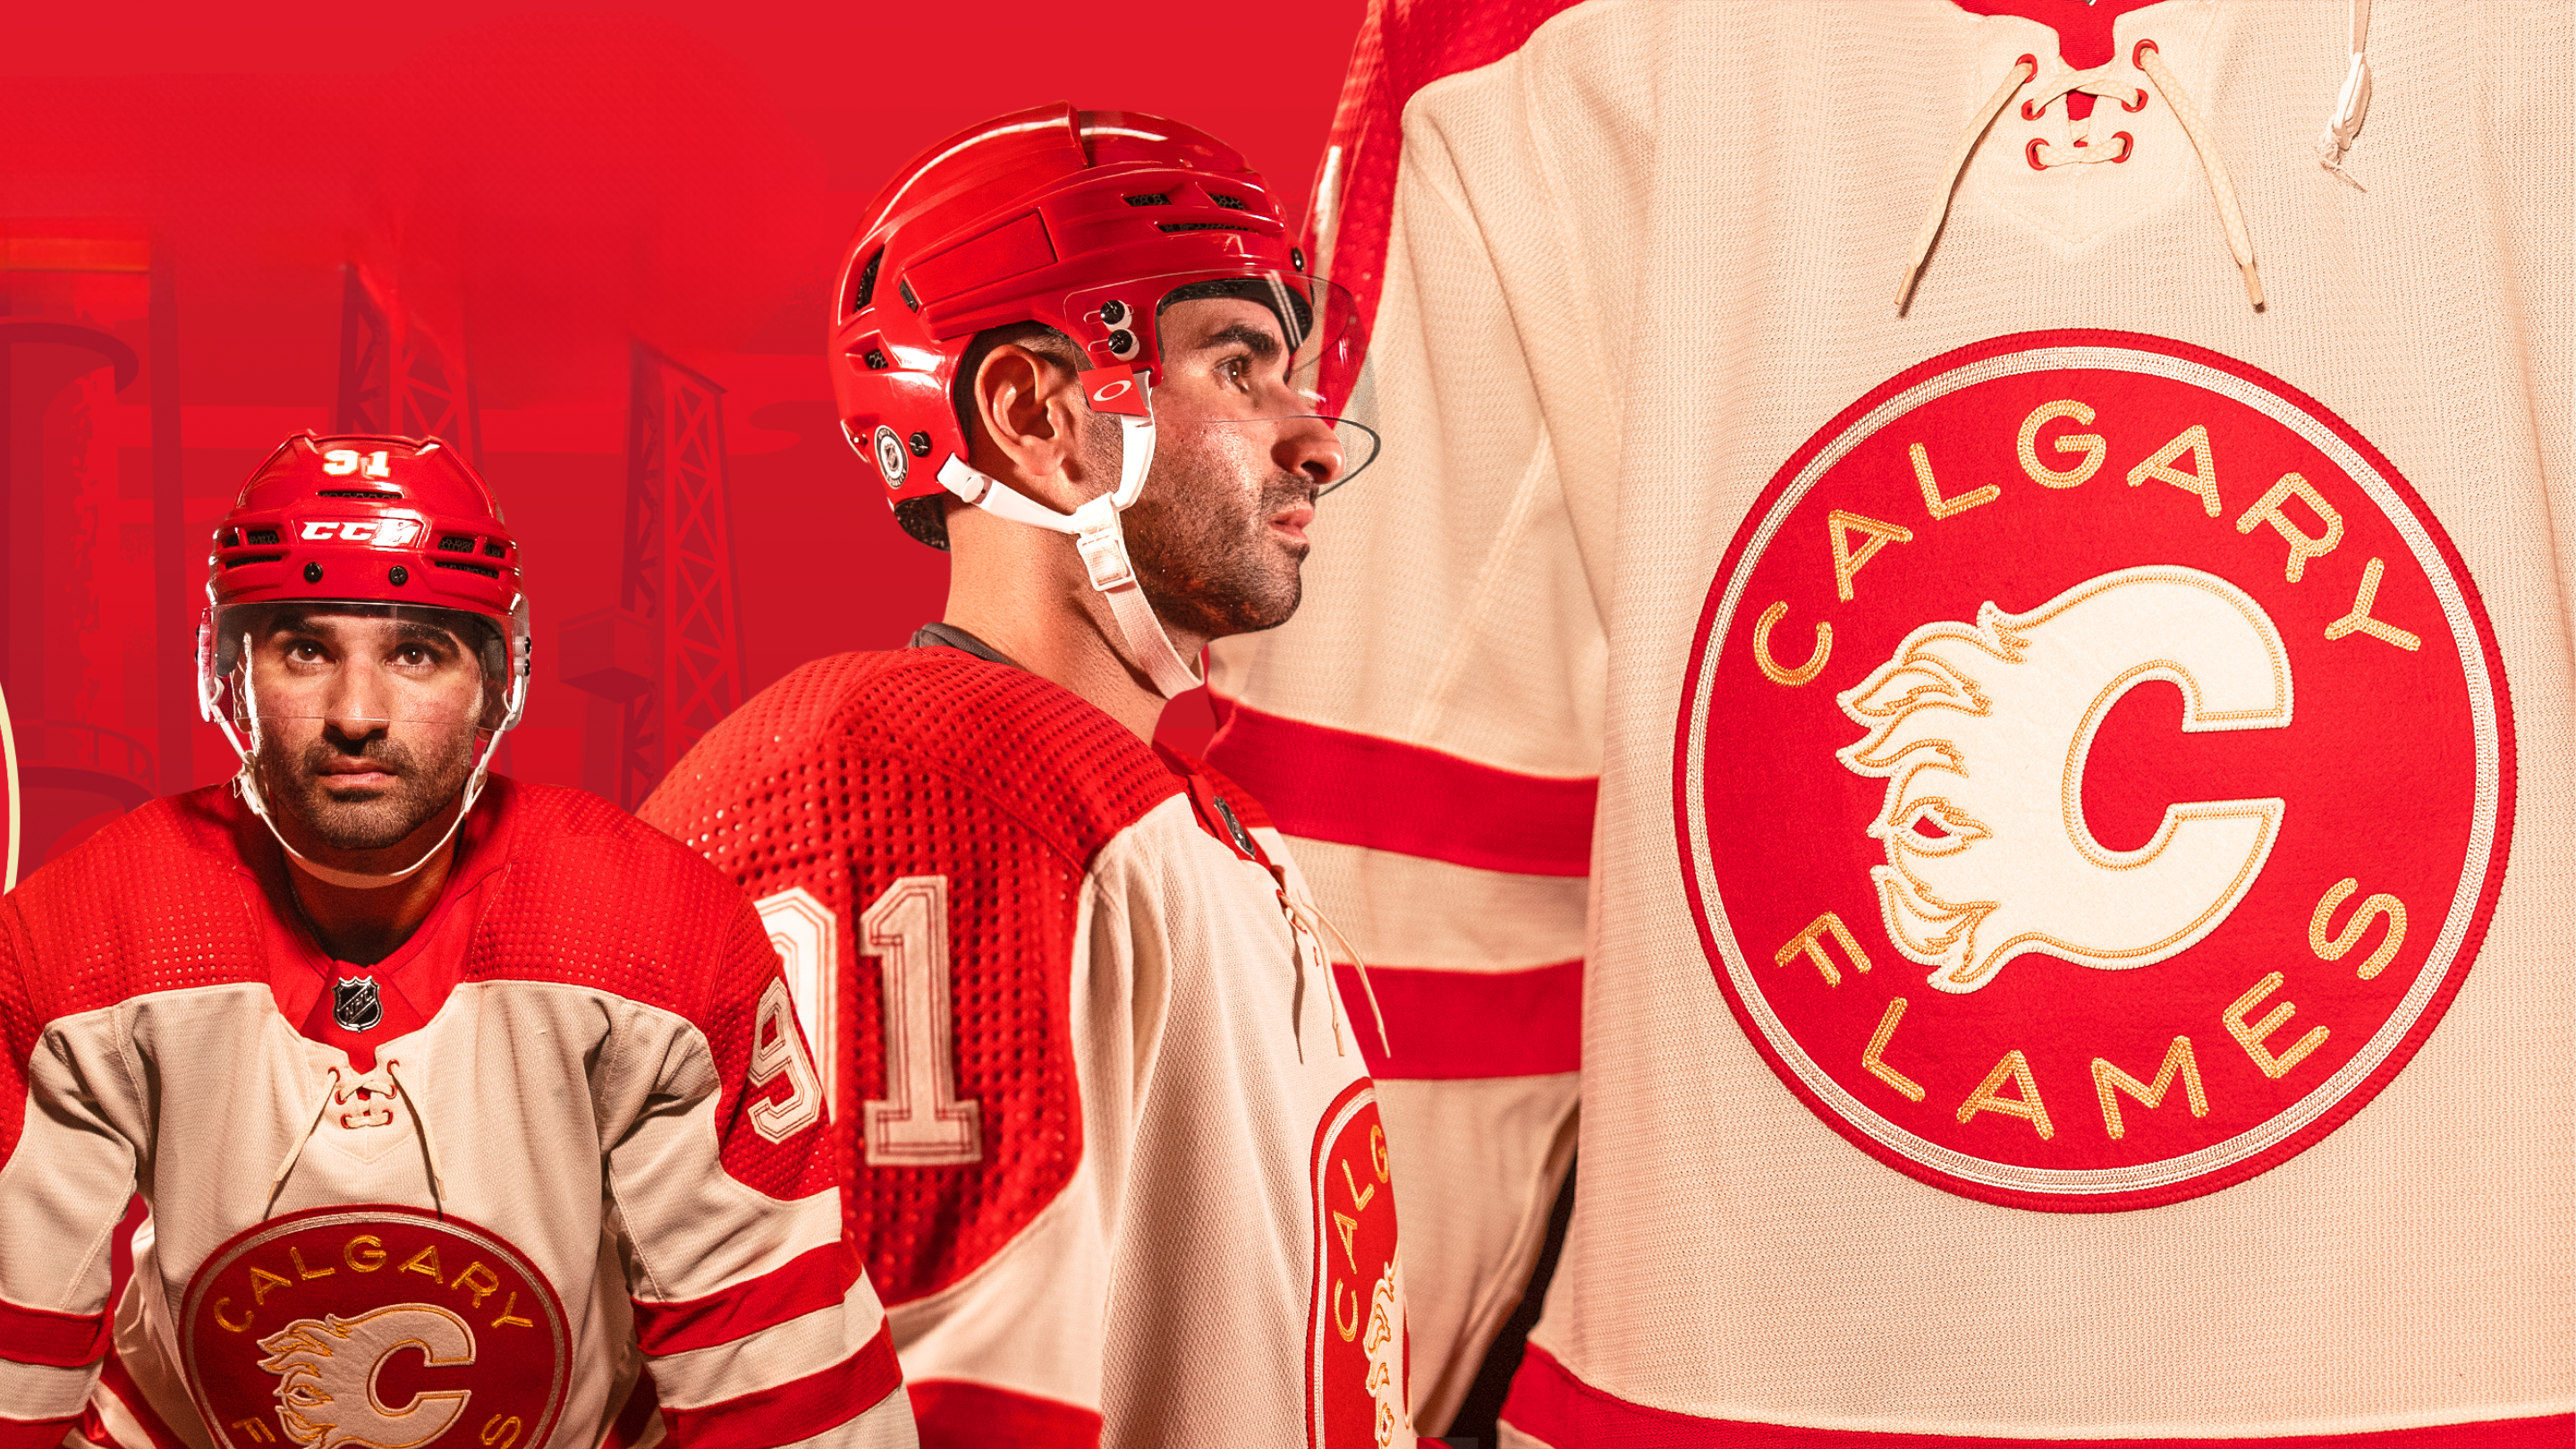 Customizable Calgary Flames Adidas Primegreen Authentic NHL Hockey Jersey - Home / XXL/56